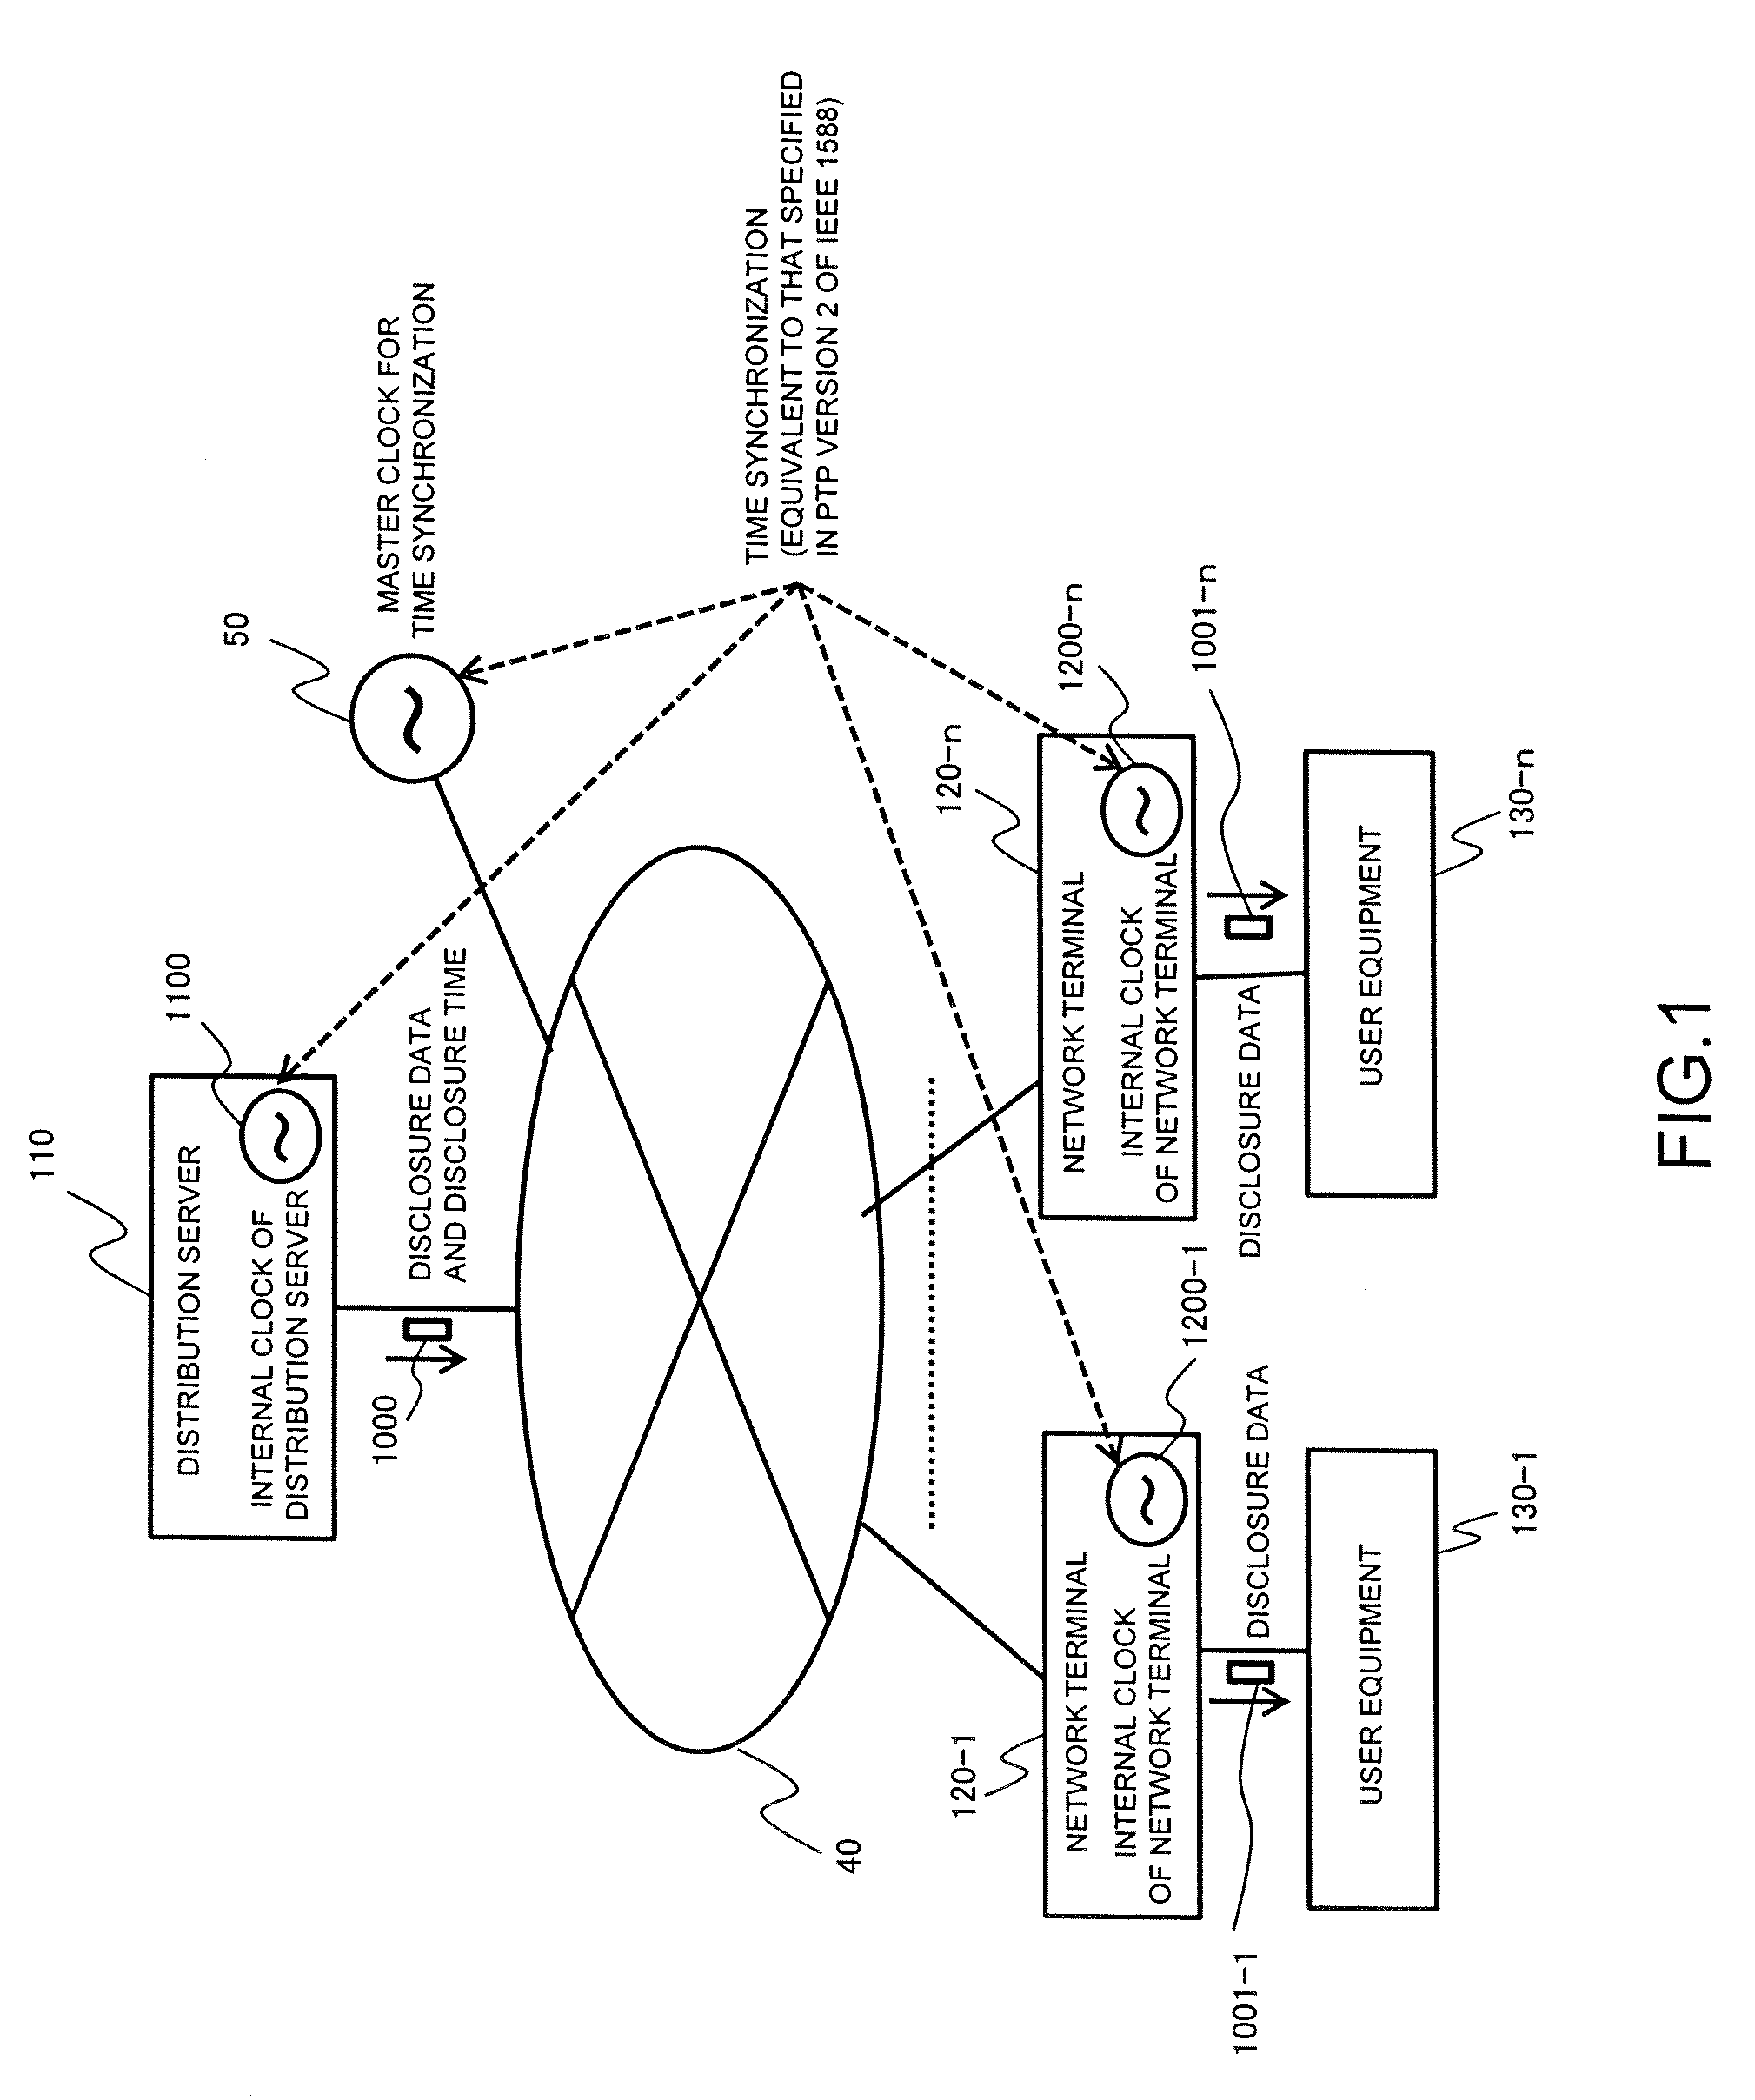 Transfer apparatus, transfer network system, and transfer method